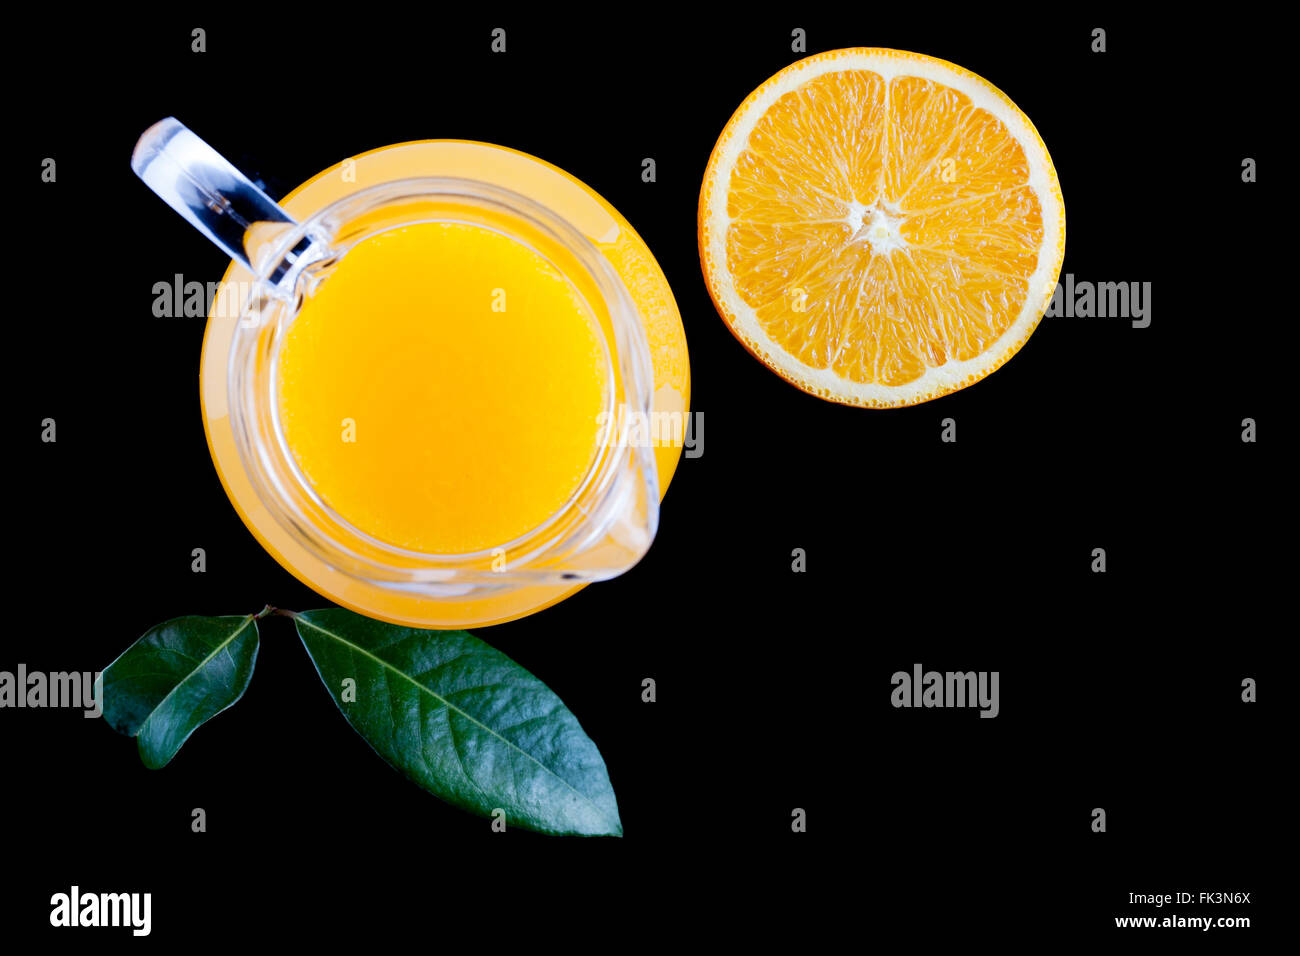 https://c8.alamy.com/comp/FK3N6X/pitcher-of-fresh-orange-juice-on-black-background-top-view-FK3N6X.jpg